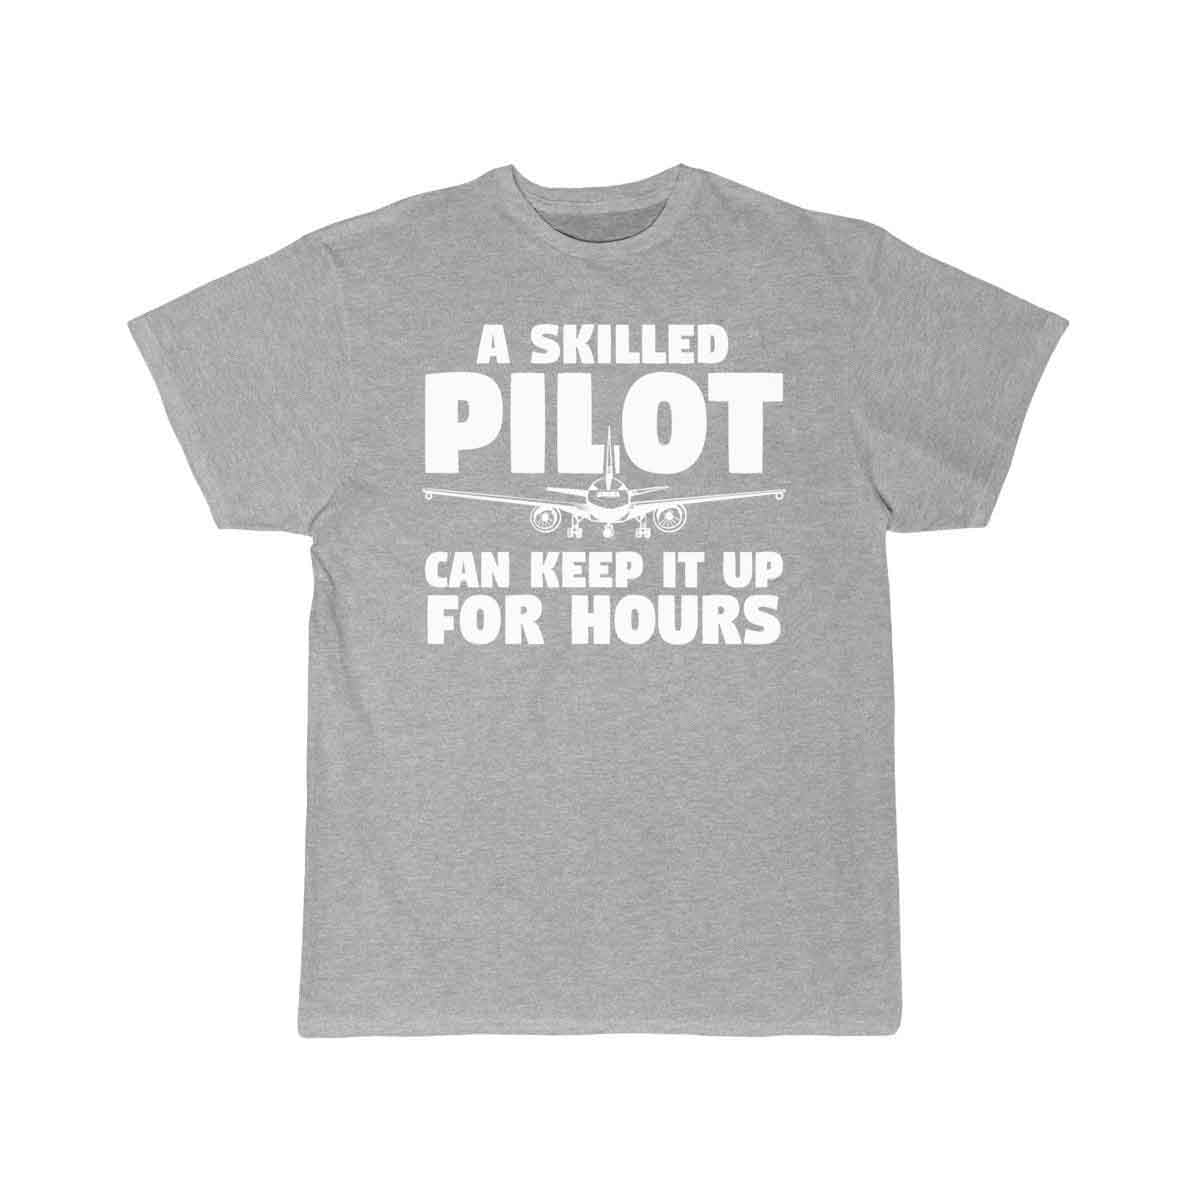 Funny Aviation Gift Idea For A Pilot T-SHIRT THE AV8R